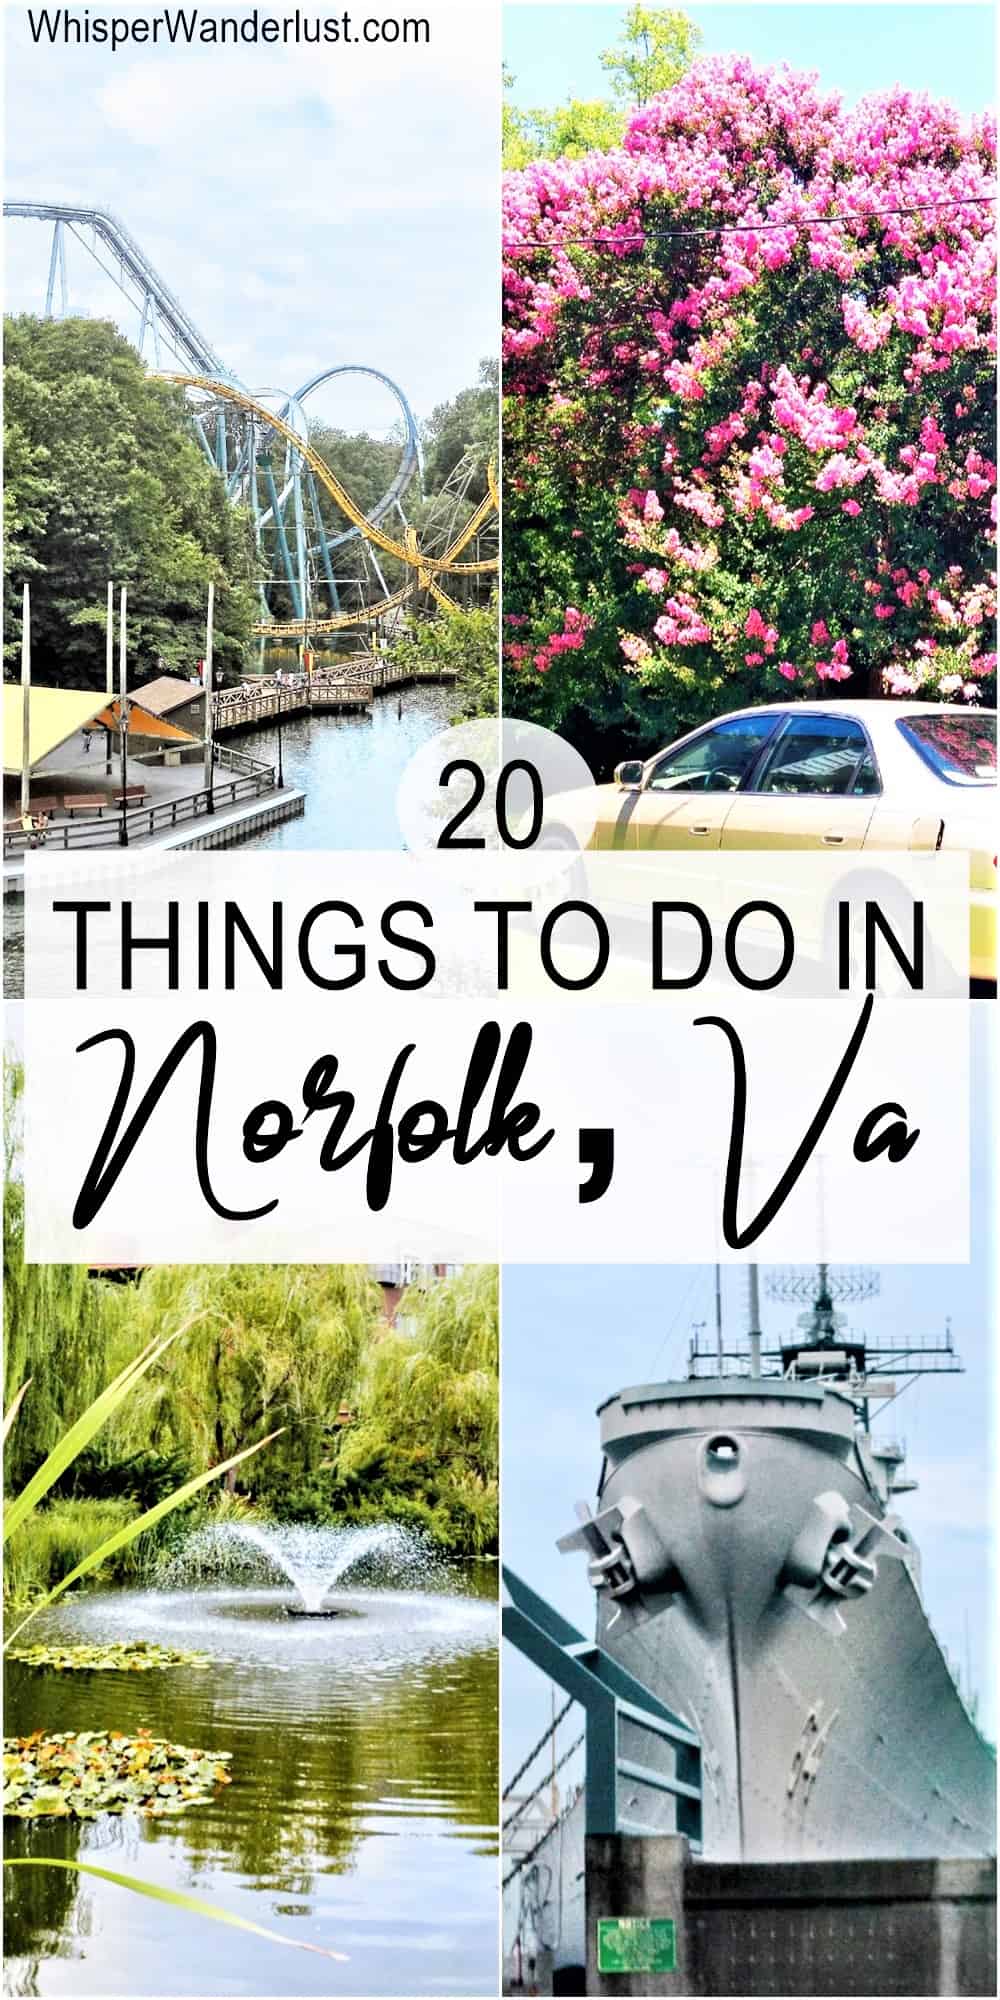 20 things to do in Norfolk, Va